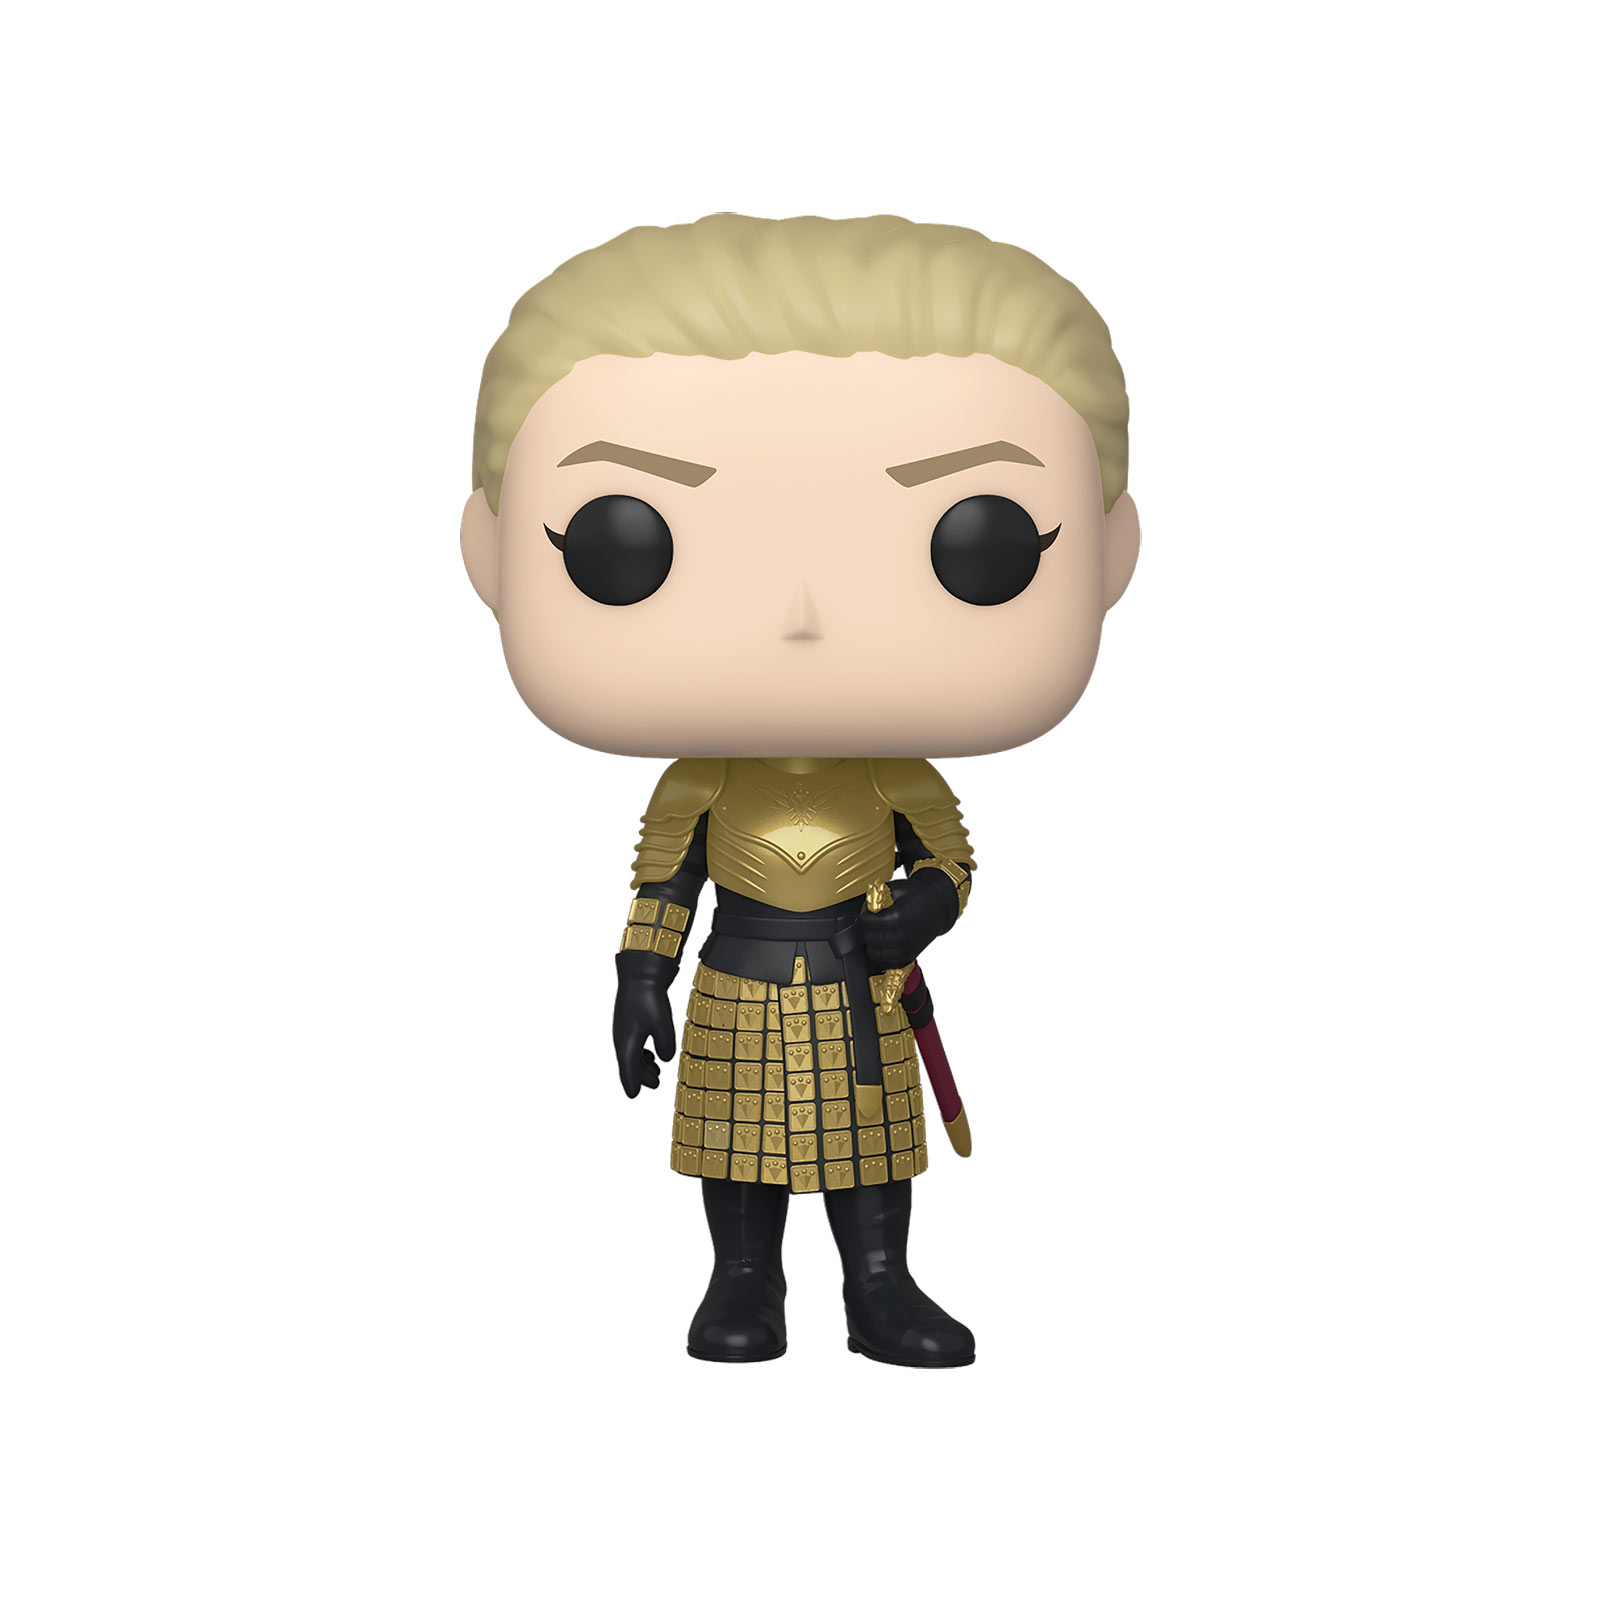 Game of Thrones - Ser Brienne of Tarth Funko Pop Figure